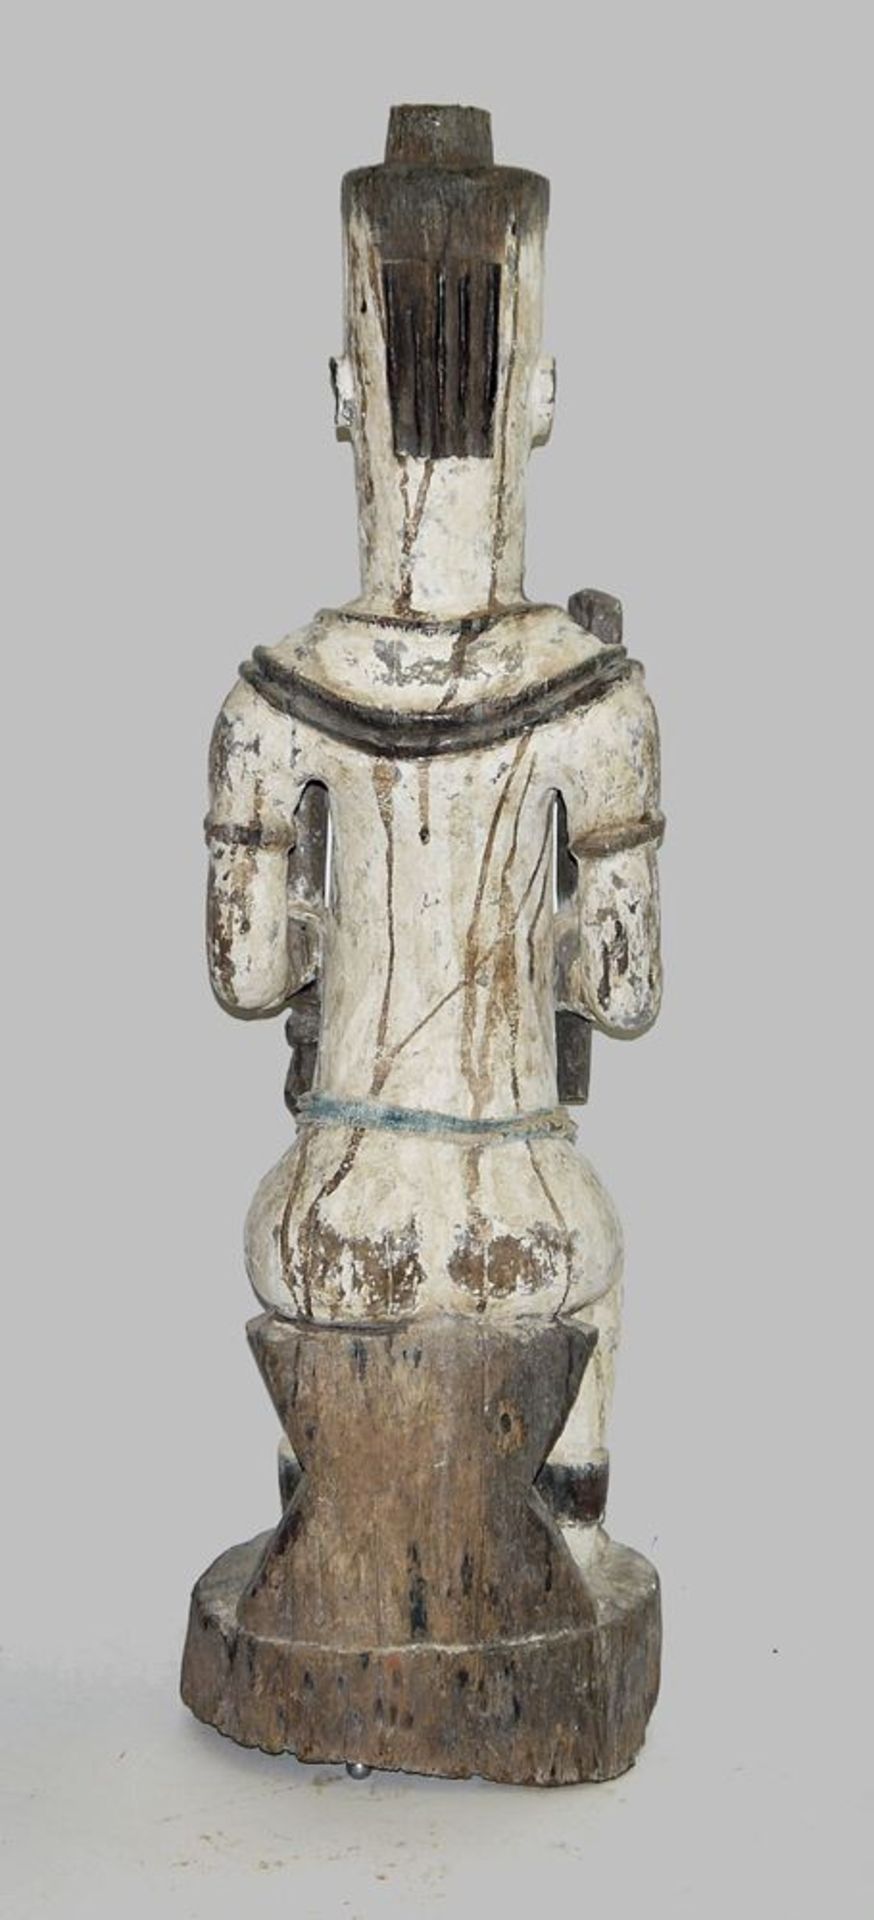 Large ancestor figure of the Urhobo, Nigeria - Image 2 of 2